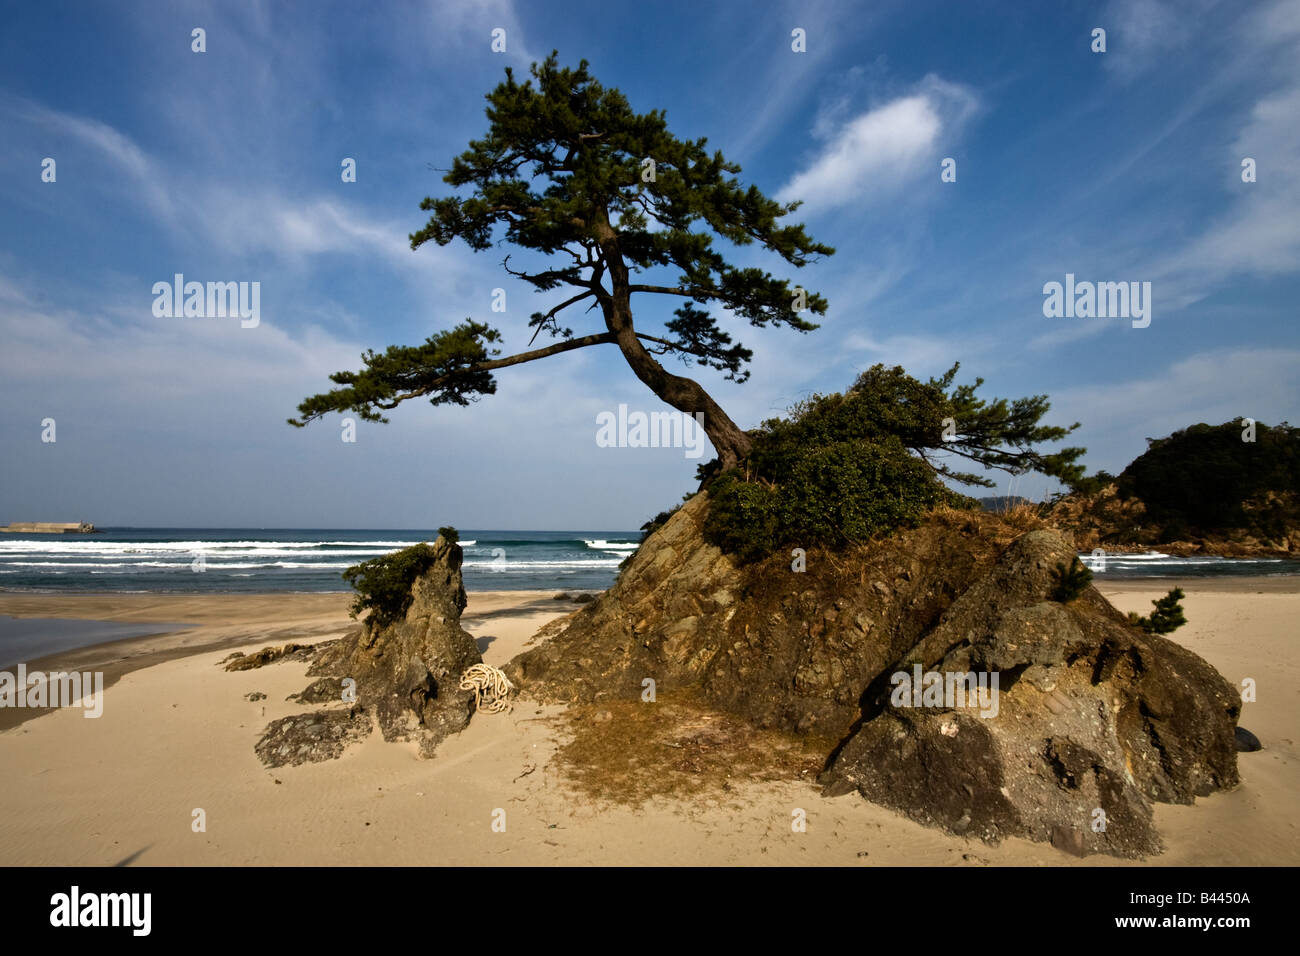 Japanese pine tree on beach Stock Photo